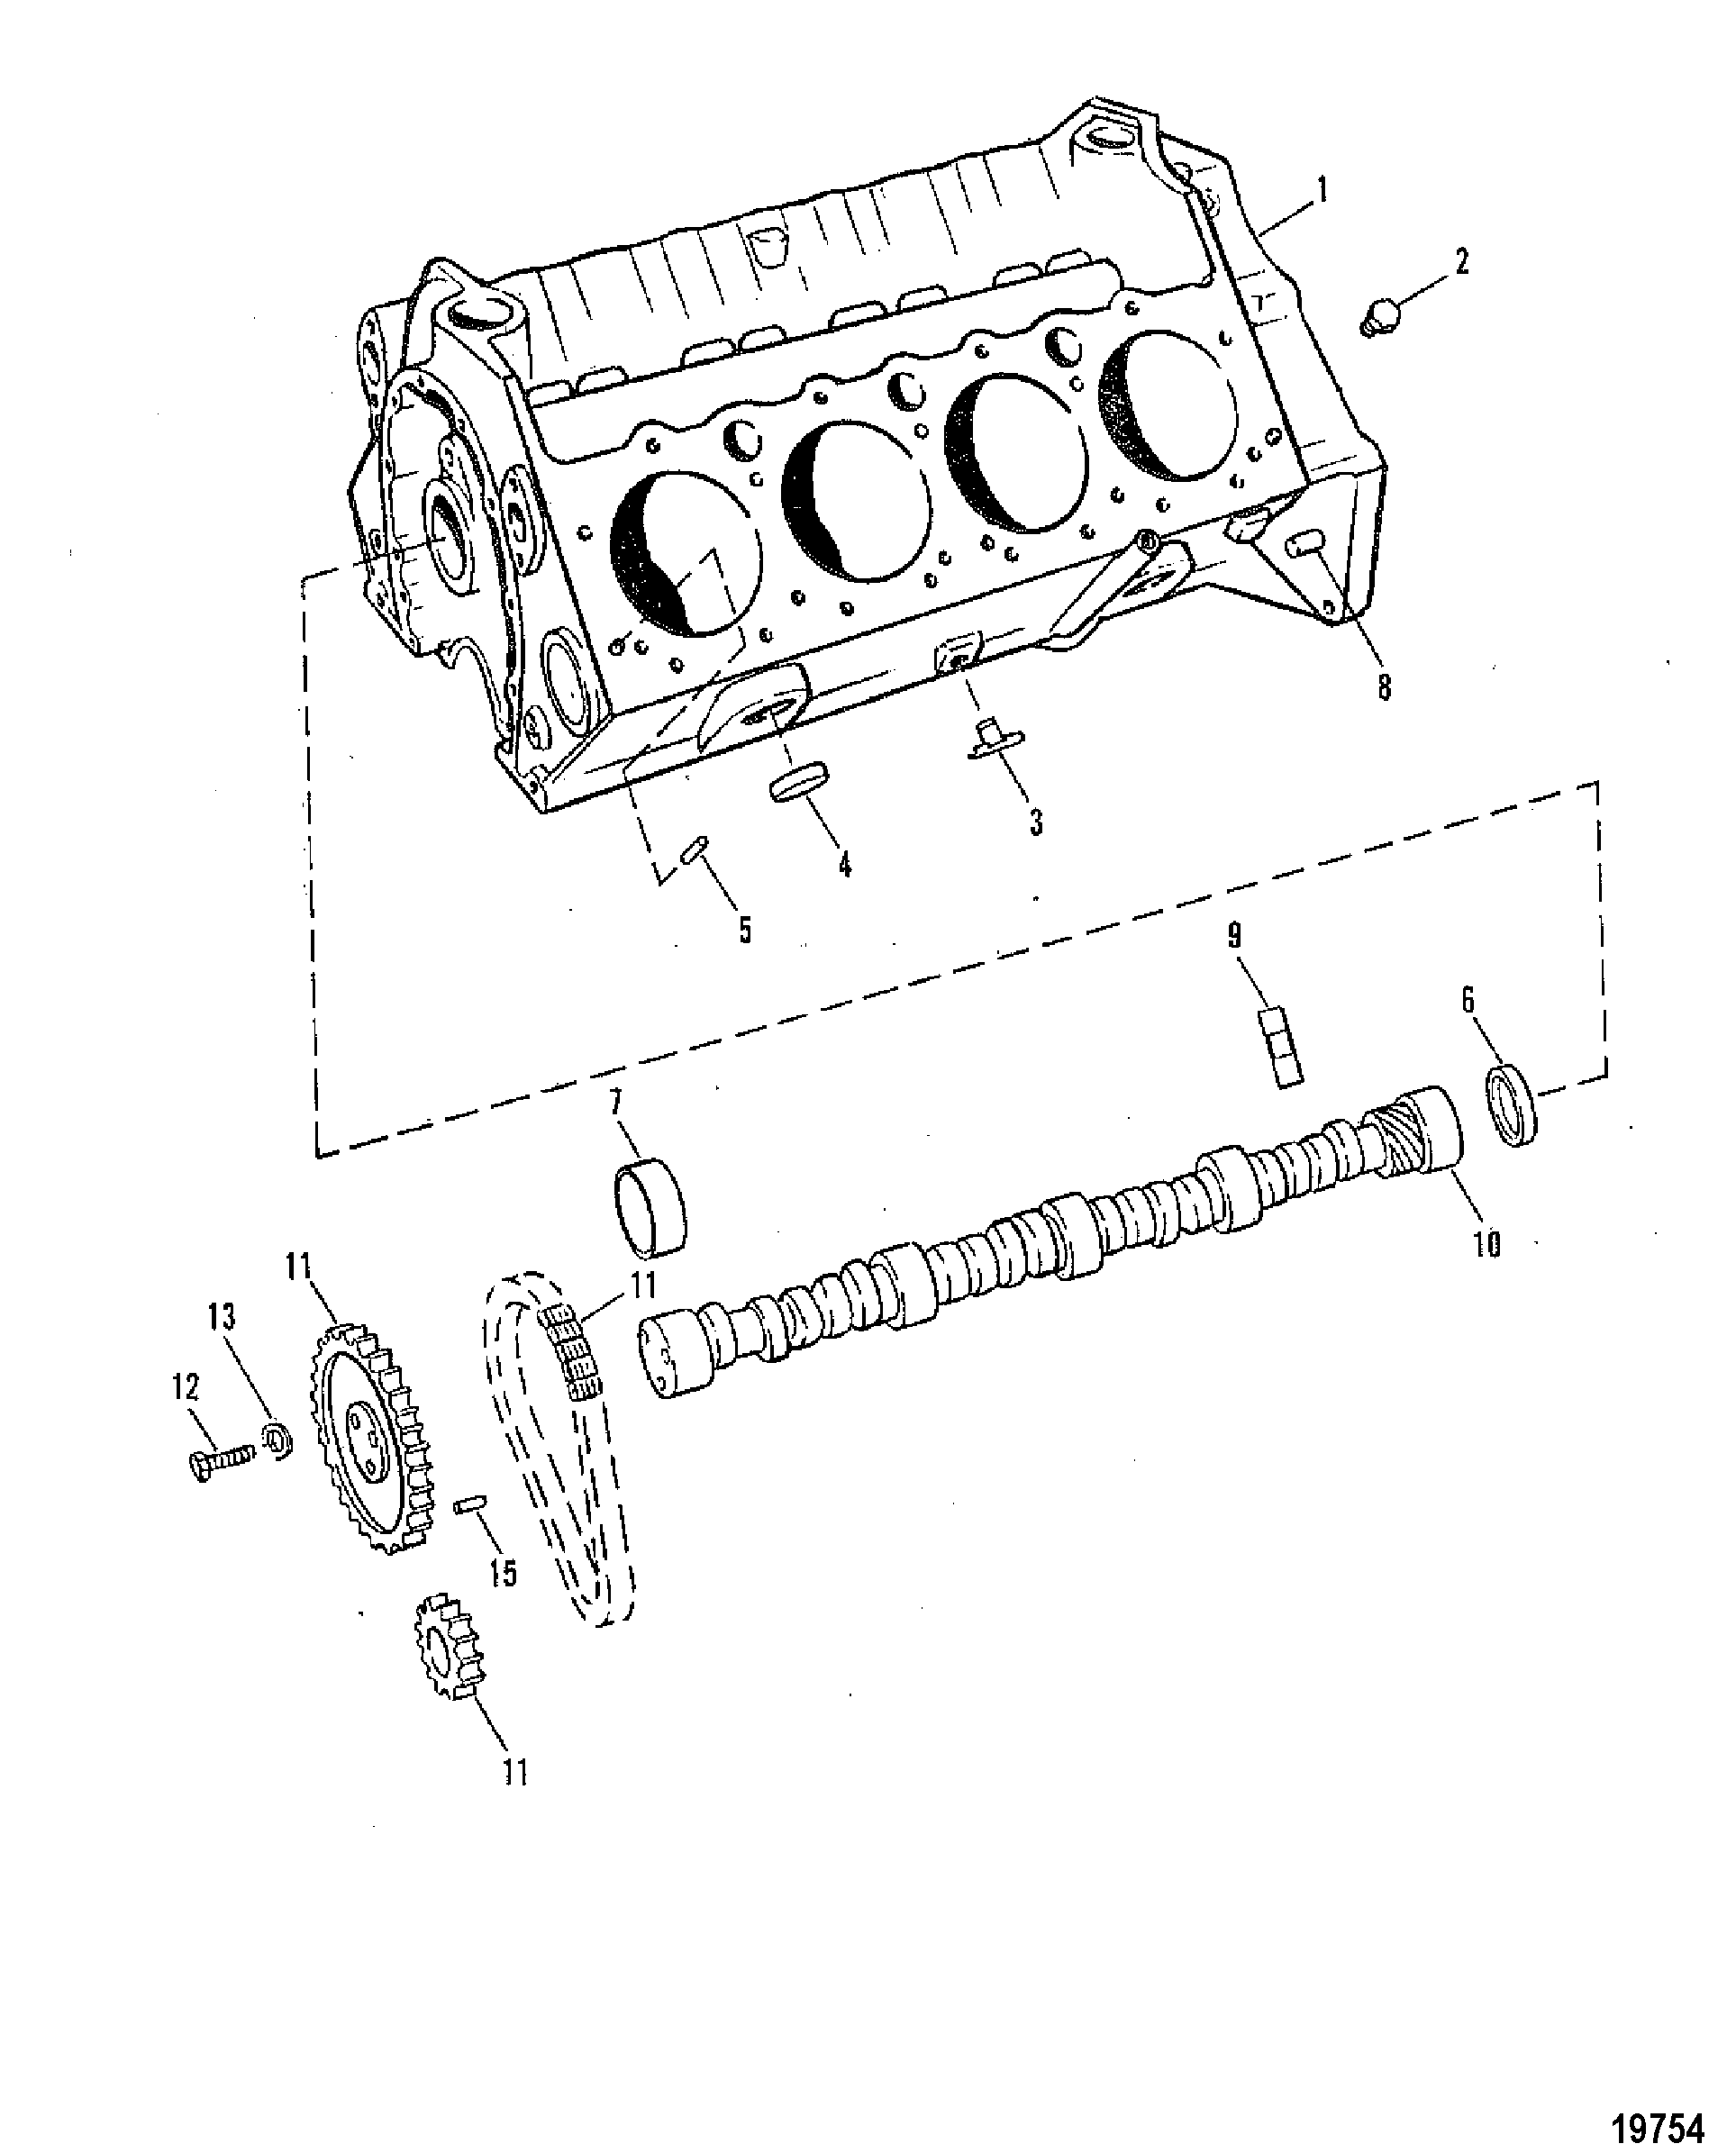 Cylinder Block and Camshaft(460)